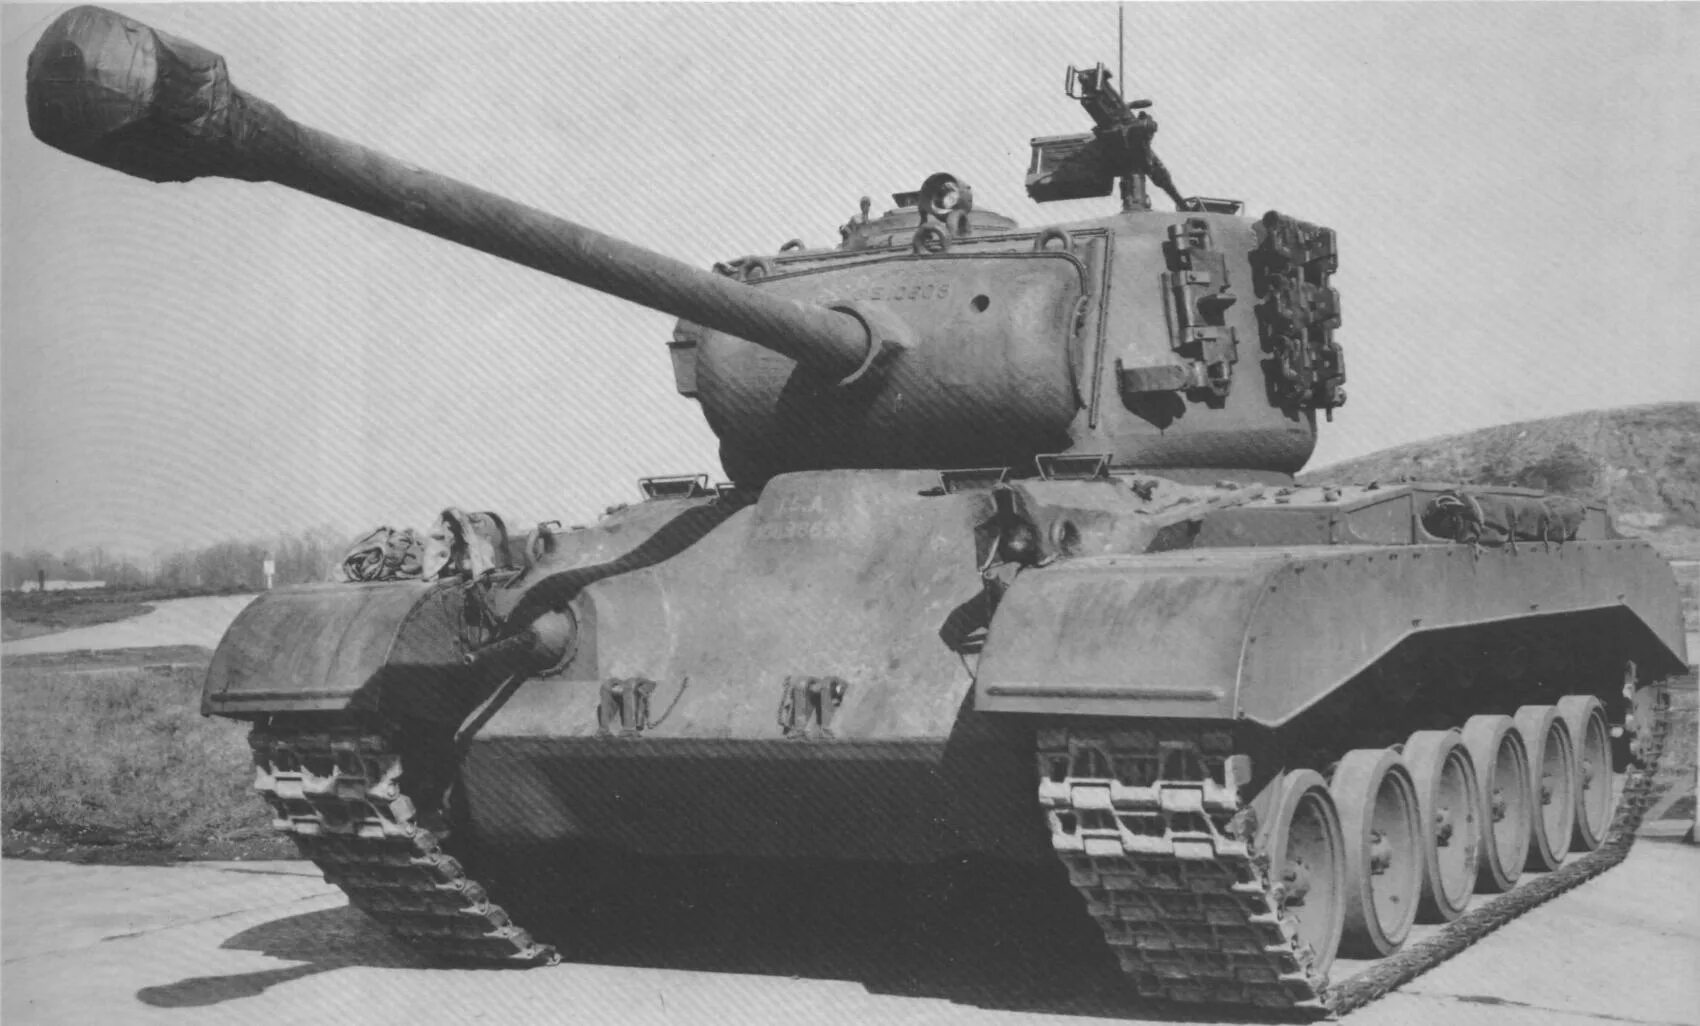 Тяжелый танк времен войны. Танк m26 Pershing. Т 26 американский танк. М26 генерал Першинг. Американский танк второй мировой Першинг.